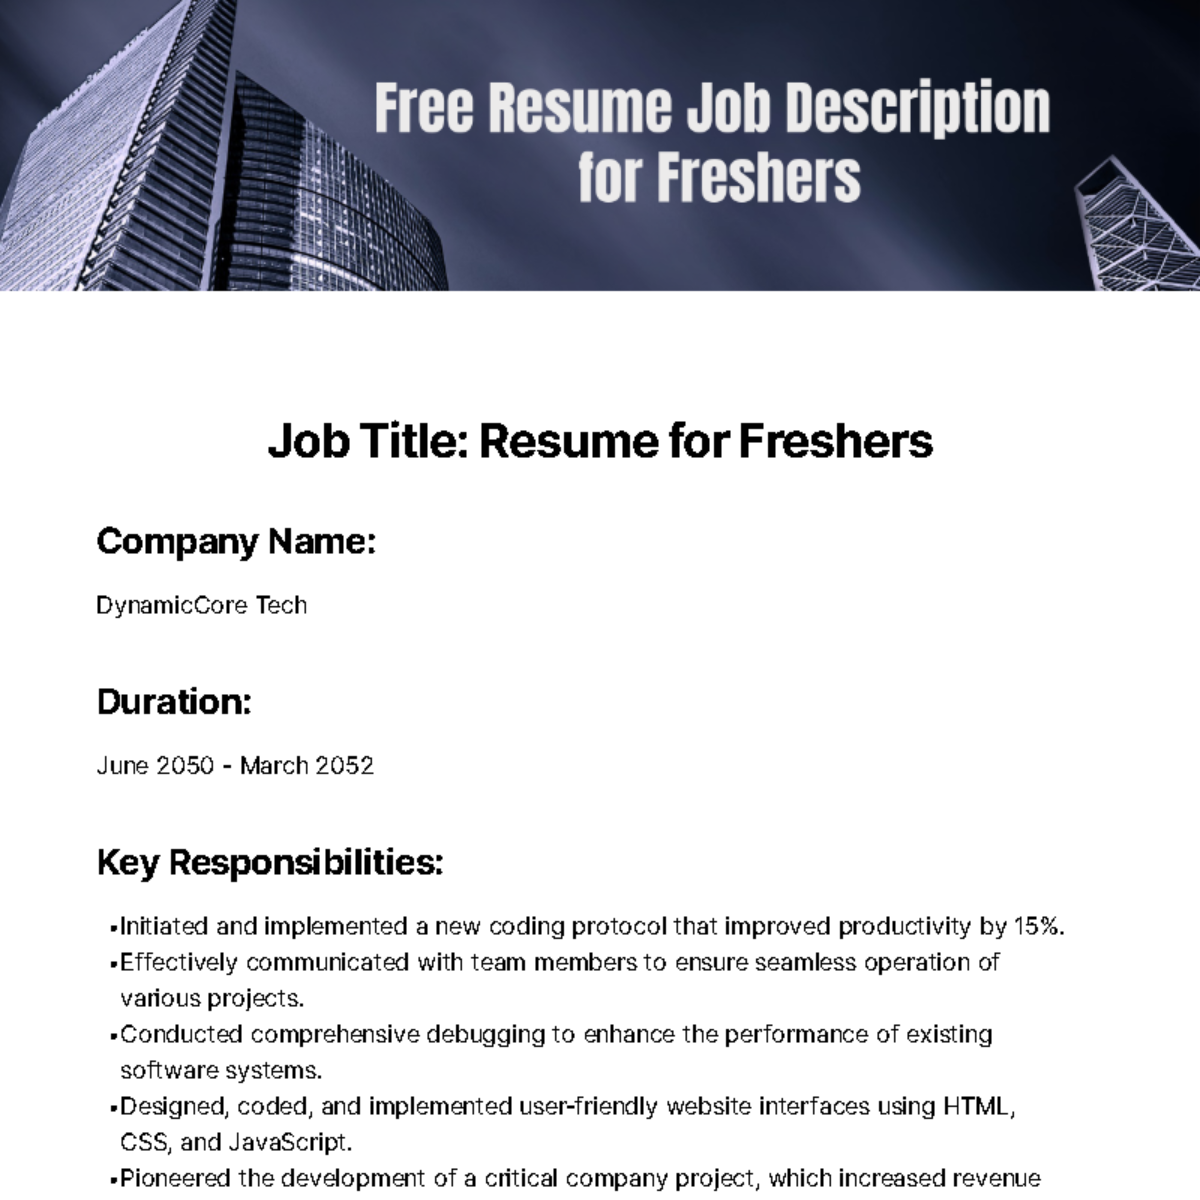 Free Resume Job Description for Freshers Template